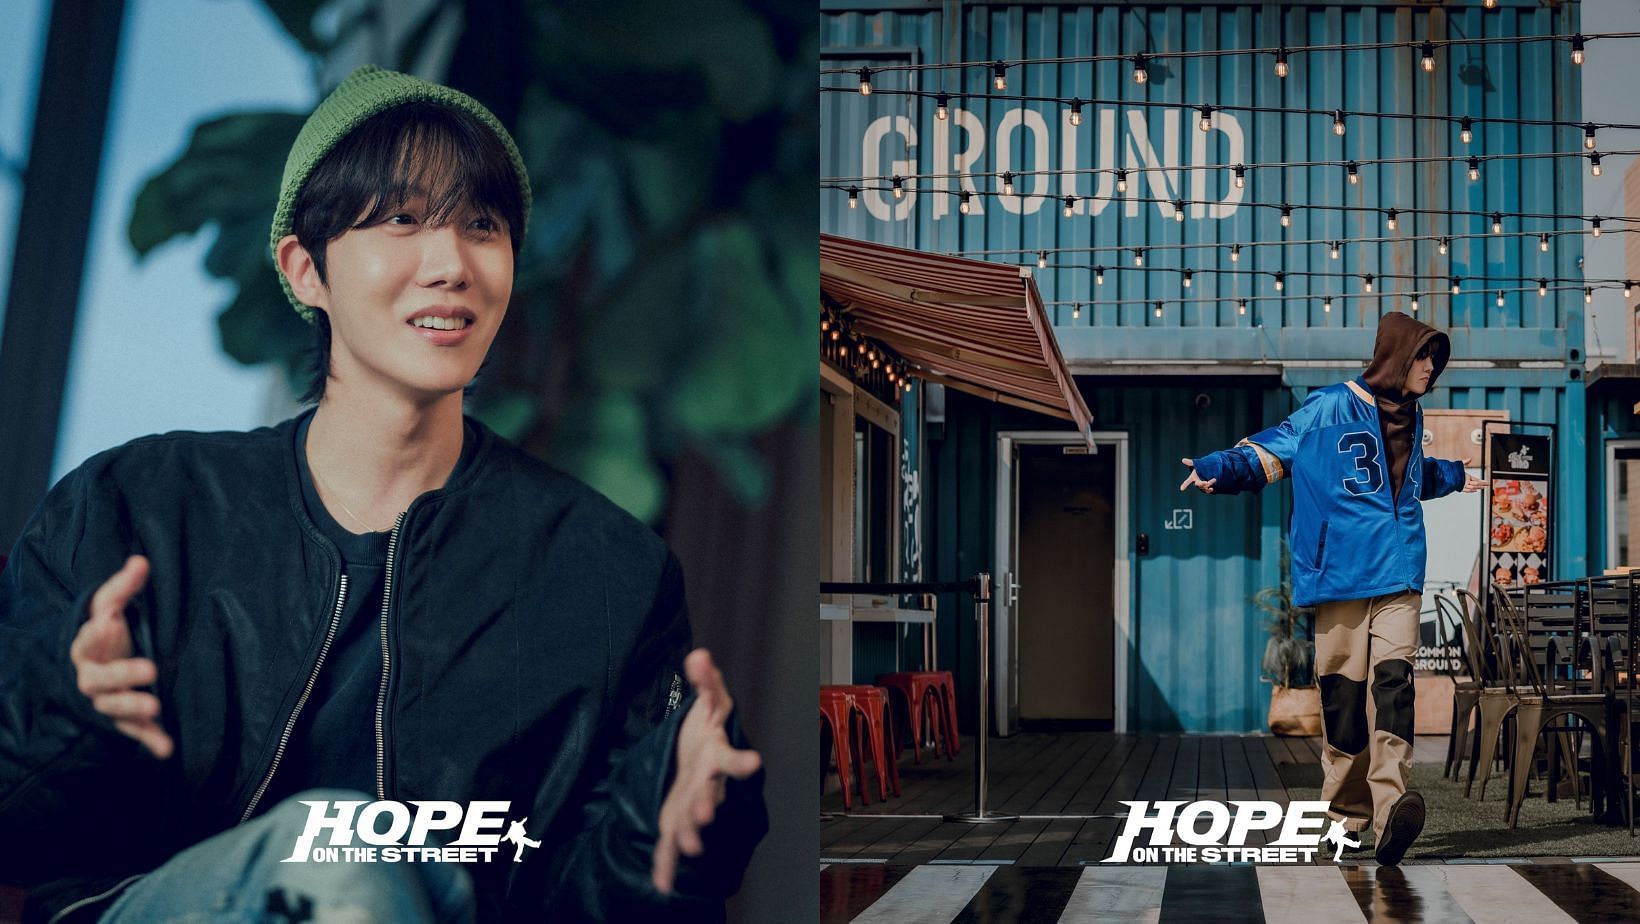 BTS J-Hope releases 